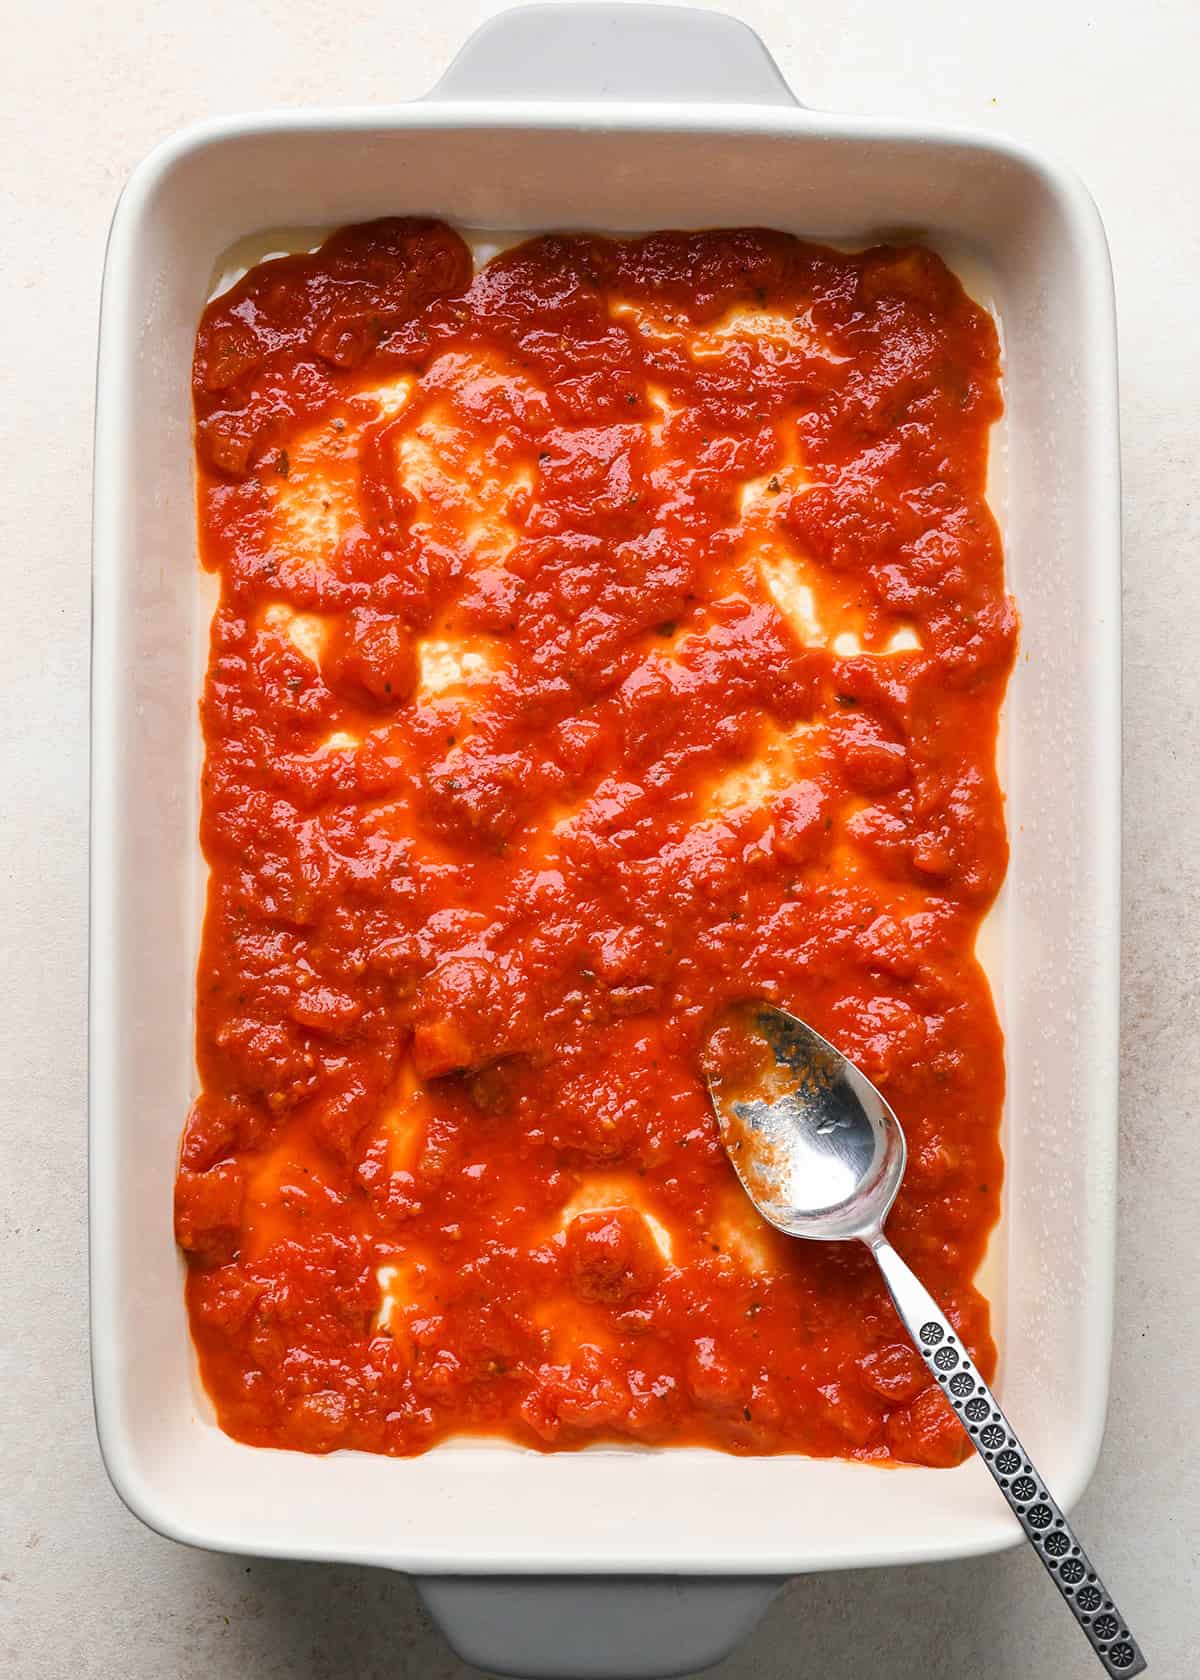 marinara sauce spread on the bottom of a baking dish